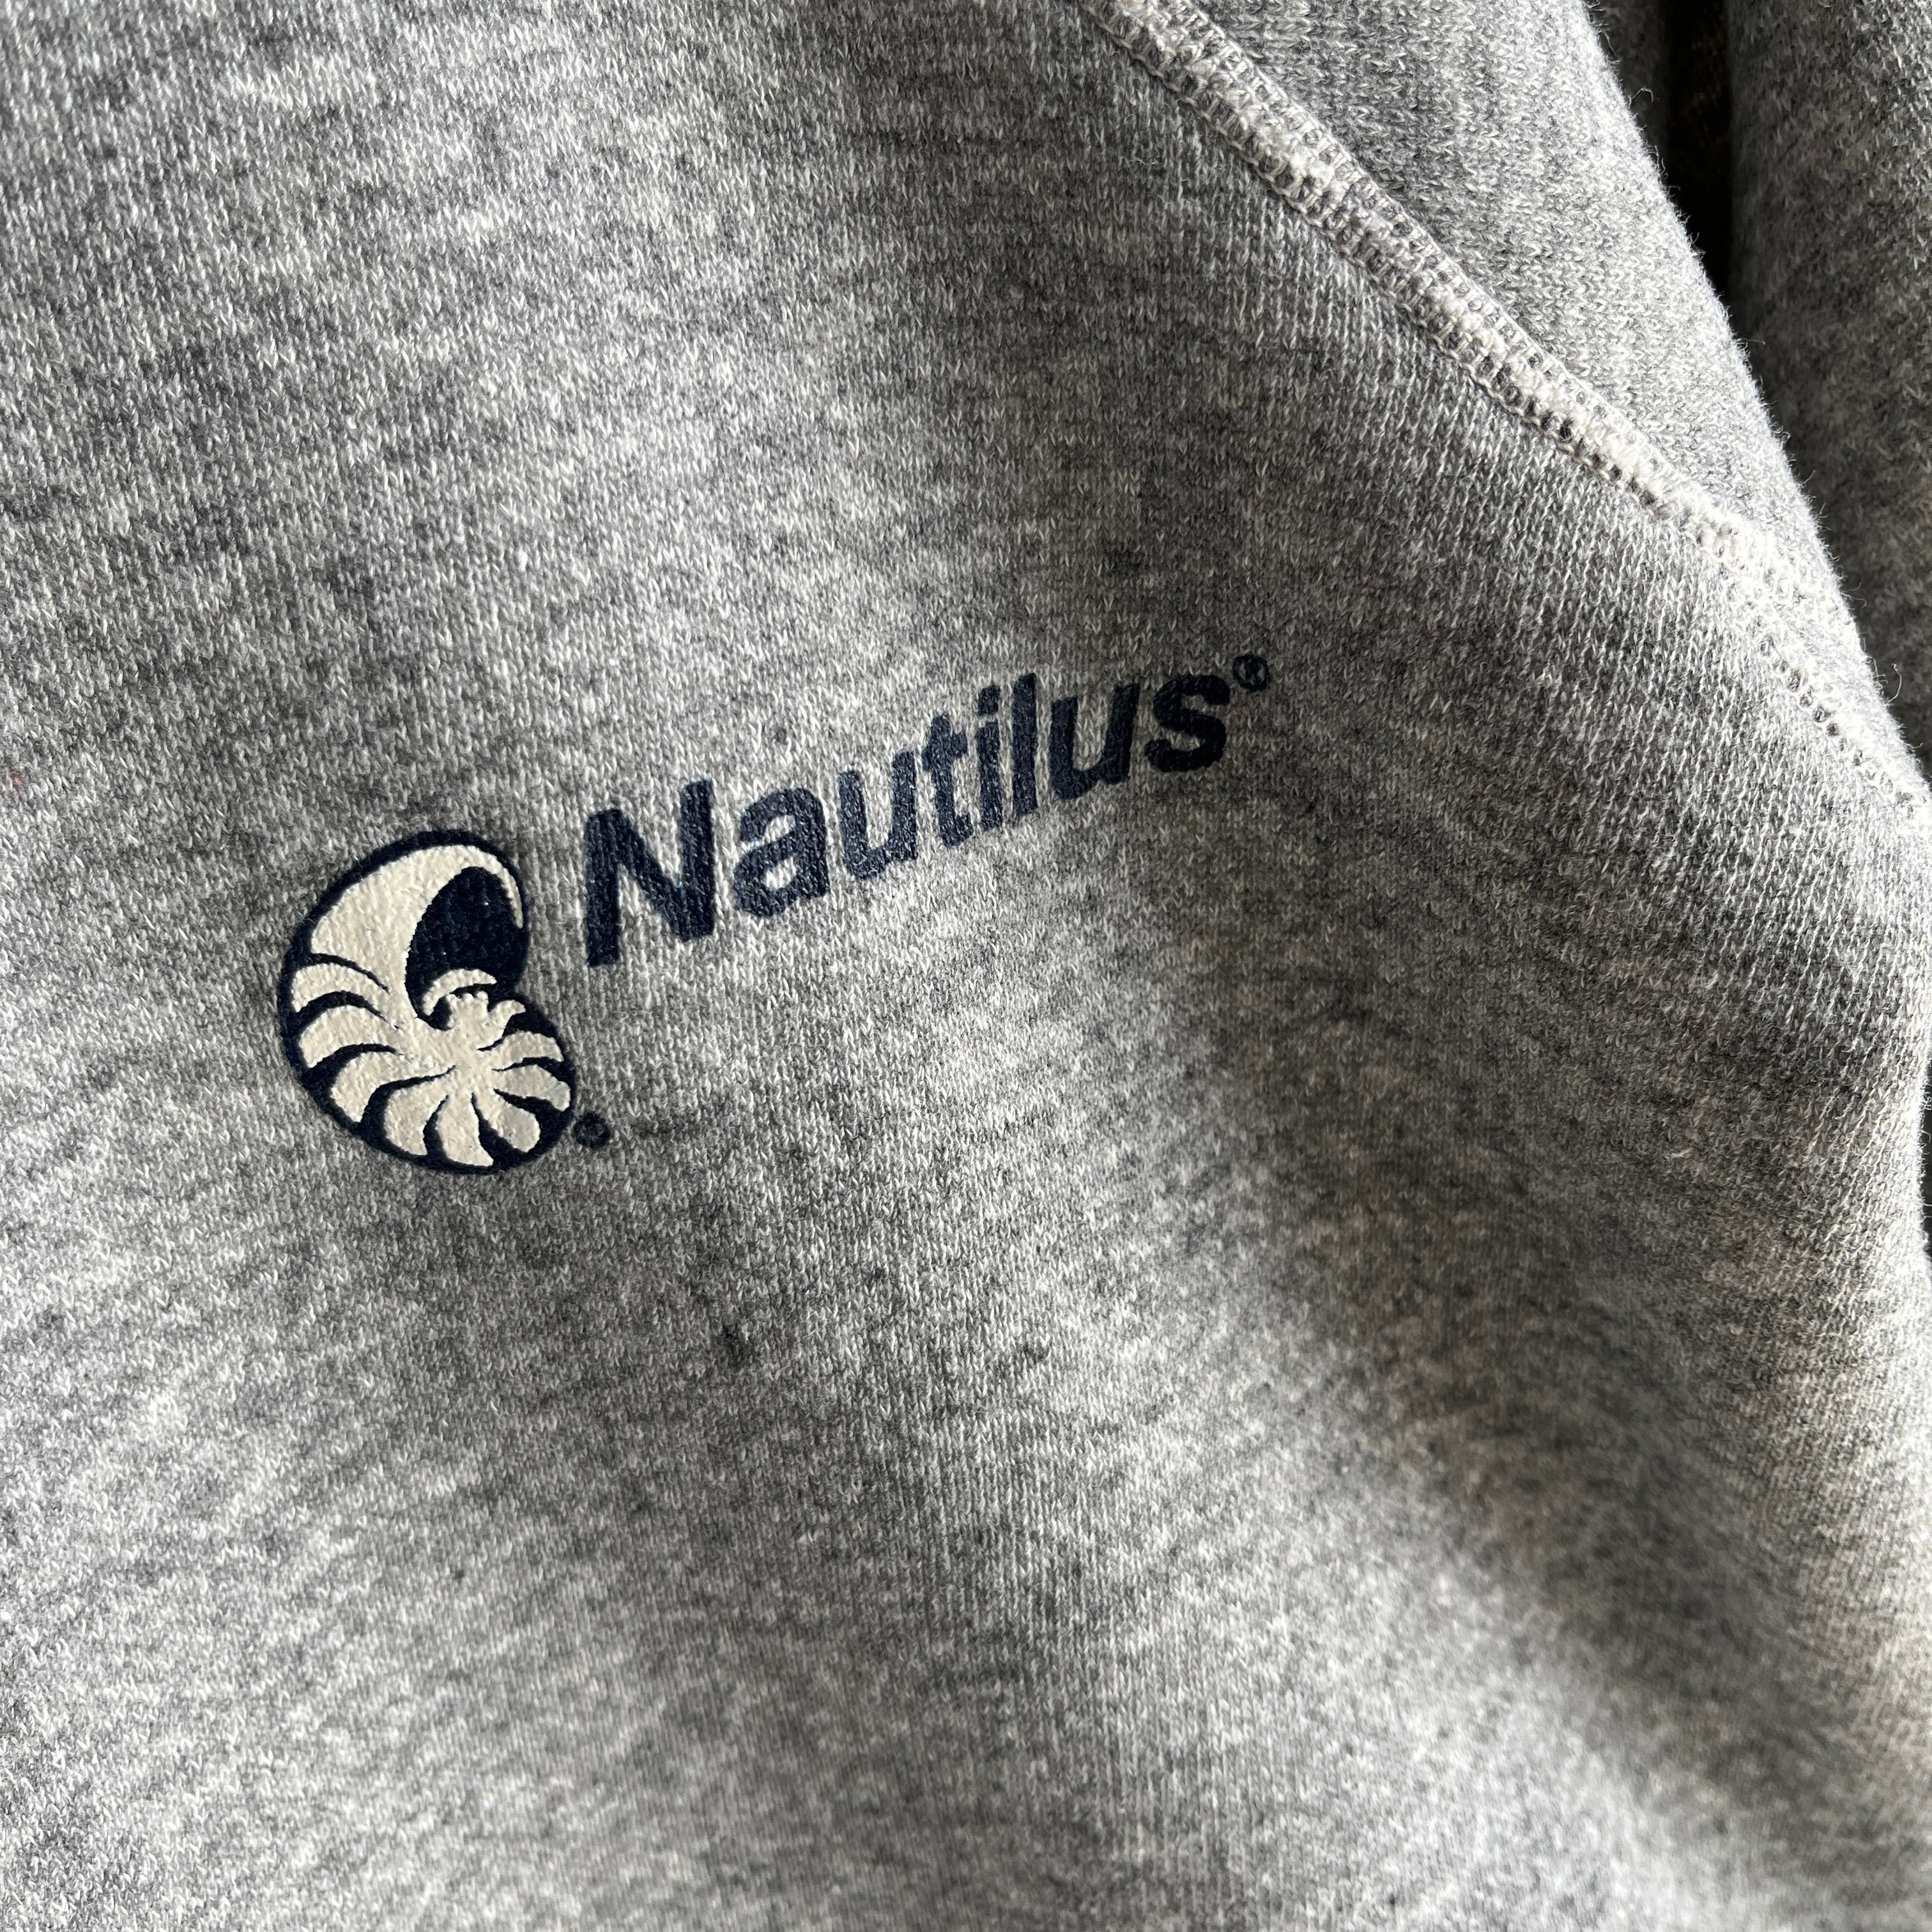 1970/80s Nautilus SUPER RAD Sweatshirt - The Stitching, The Cut!